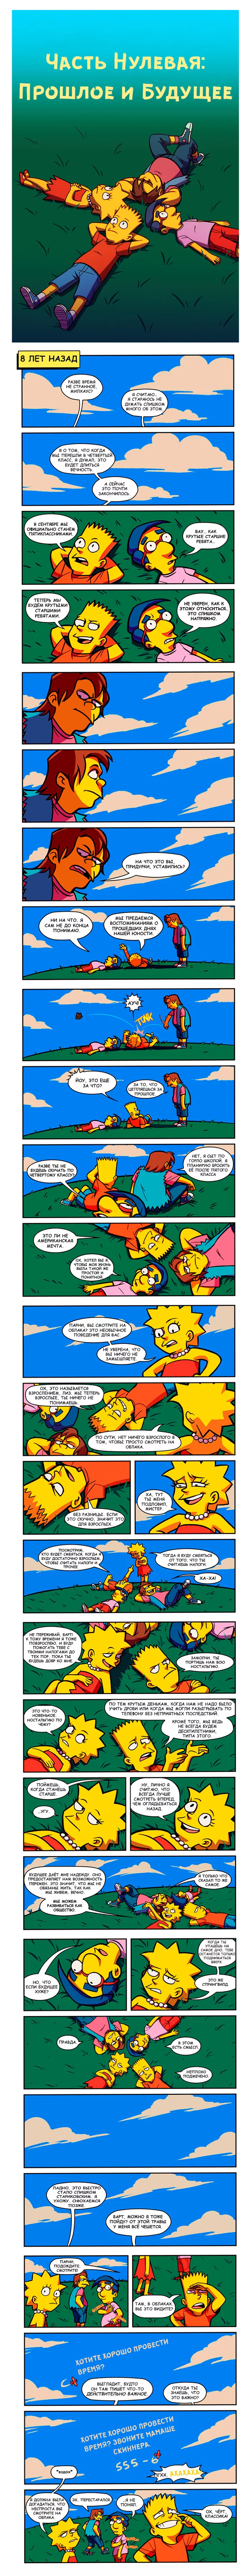 Post #7563165 - Comics, Translation, The Simpsons, Longpost